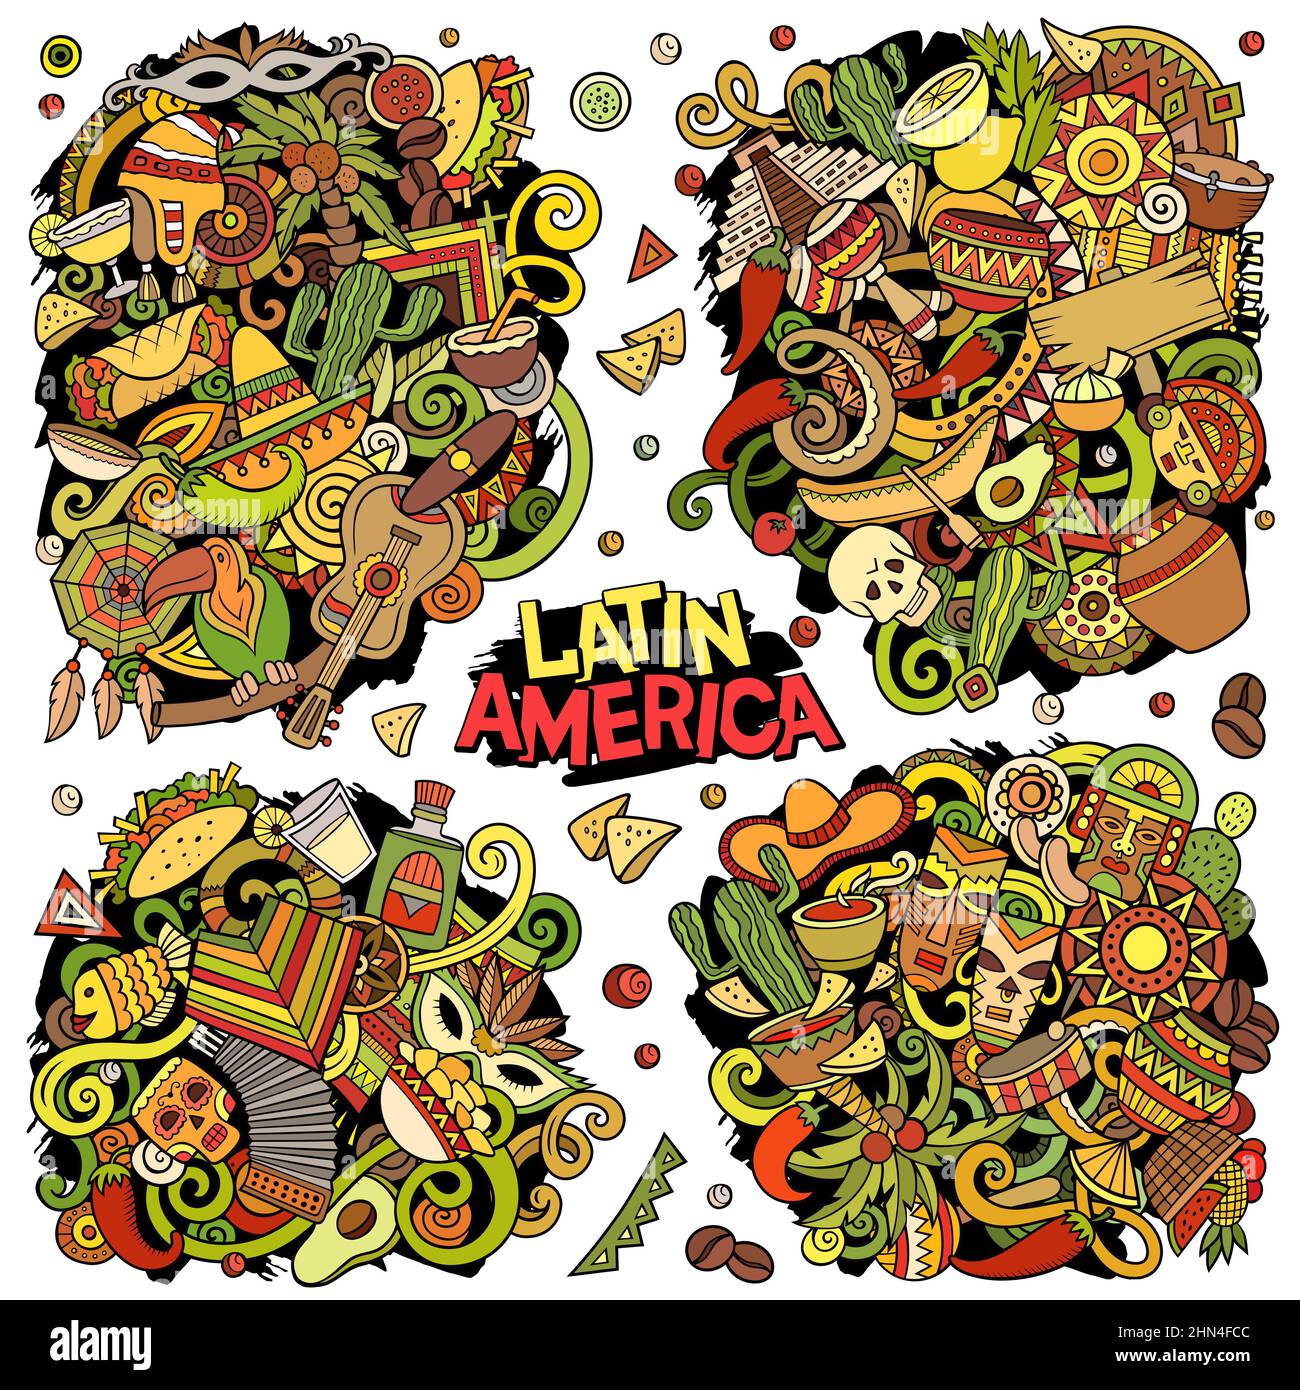 Lateinamerikanische Cartoon Vektor Doodle Designs Set. Stock Vektor